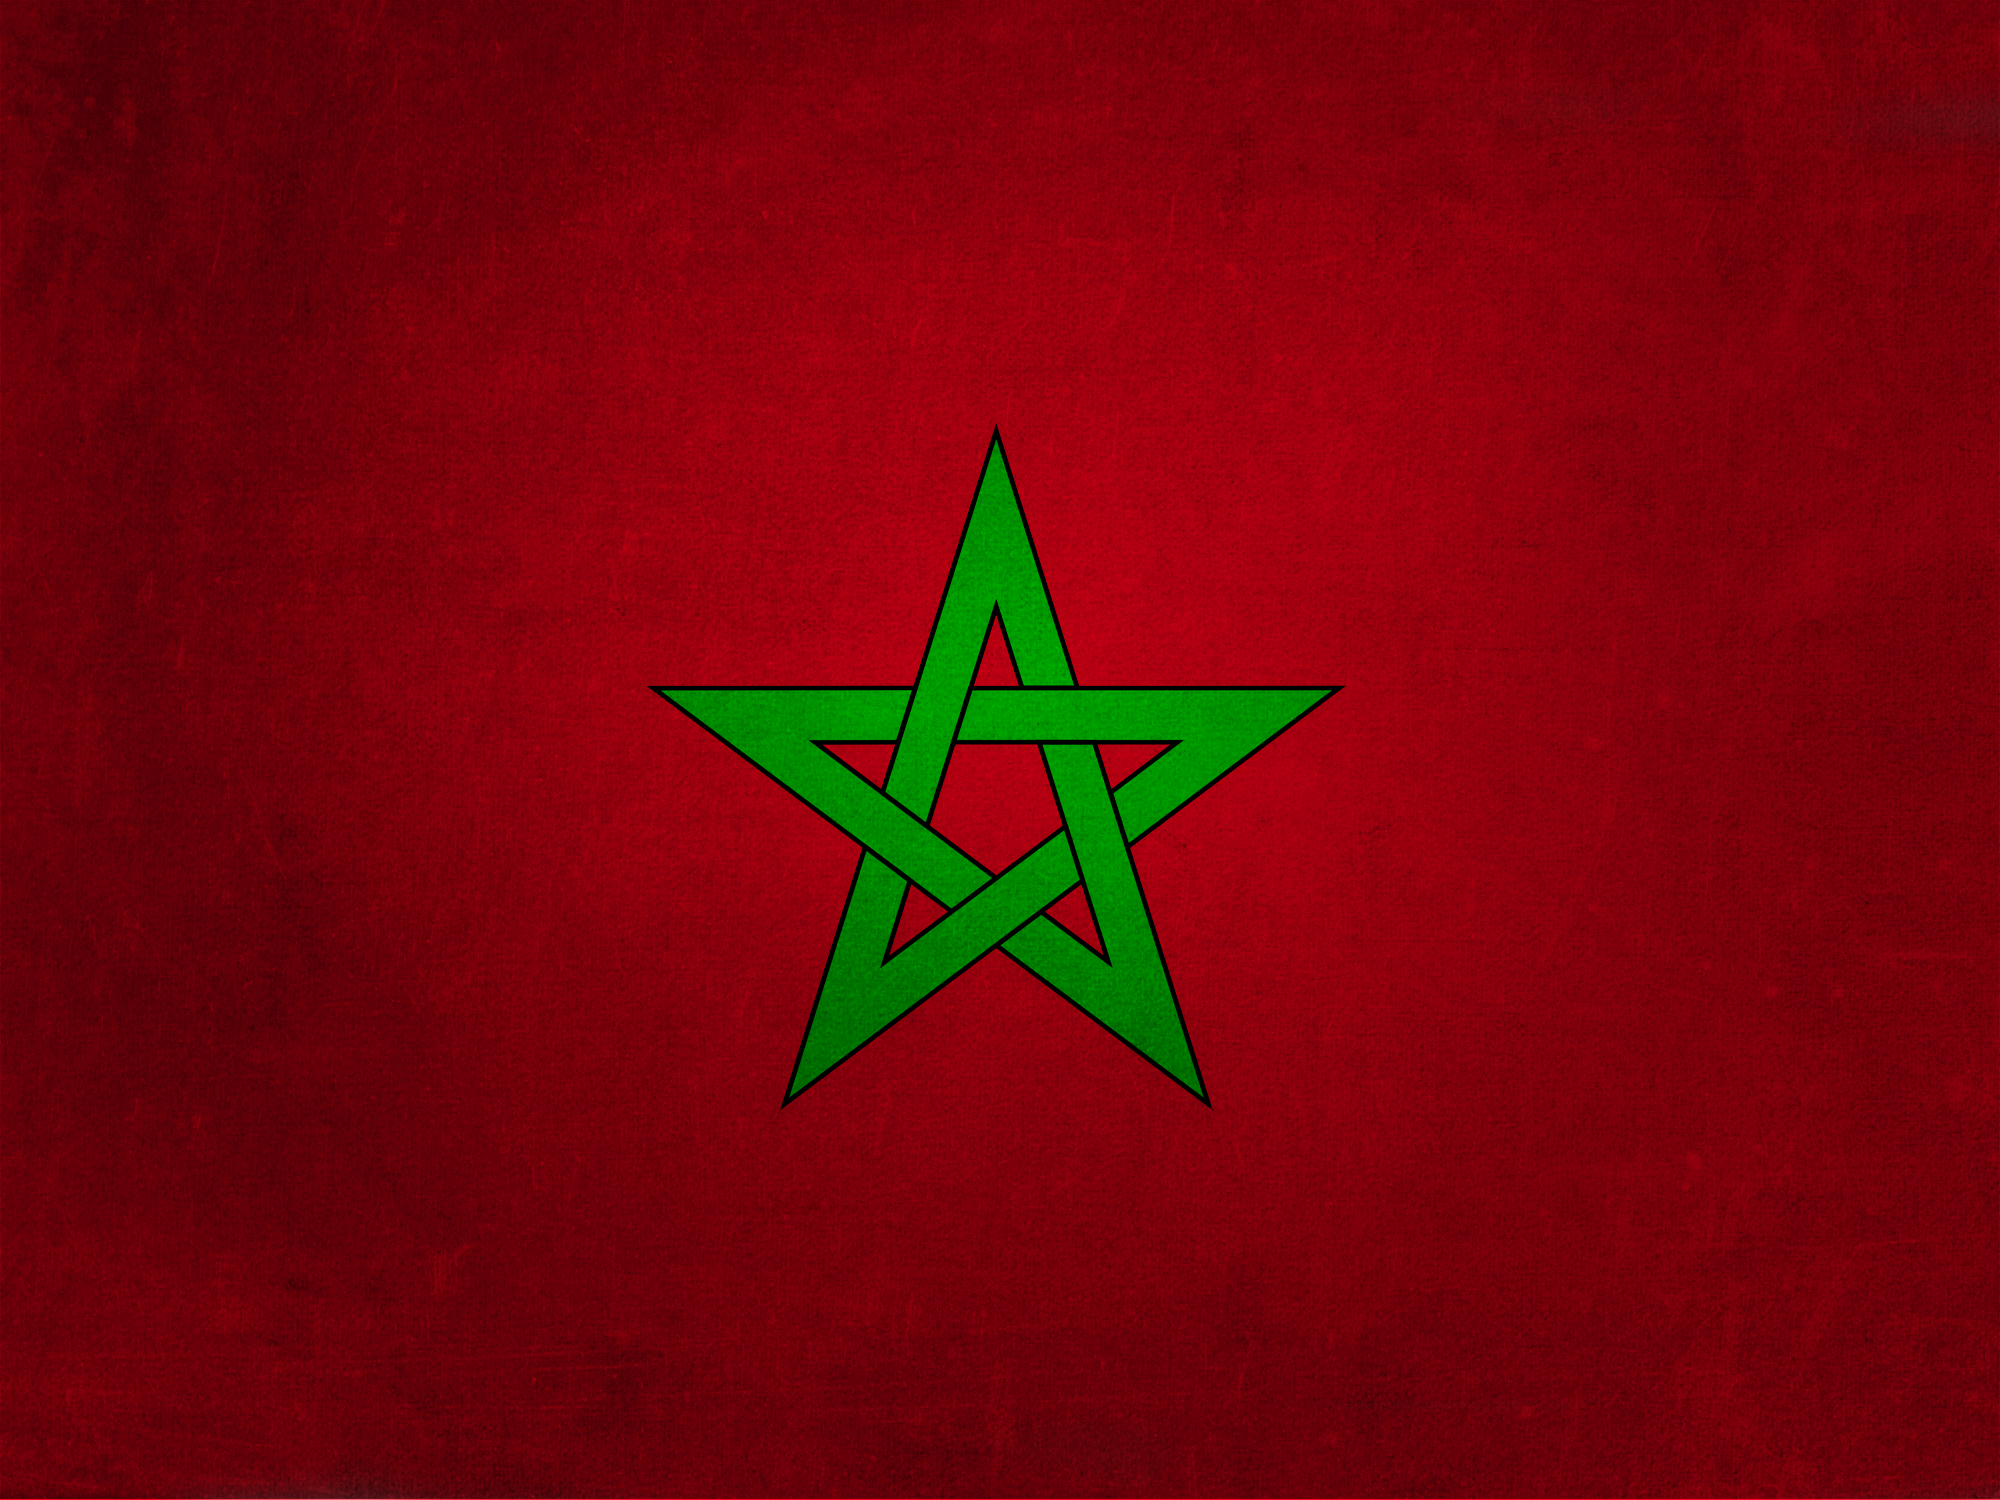 Morocco Flag Grunge by Aminebjd on DeviantArt